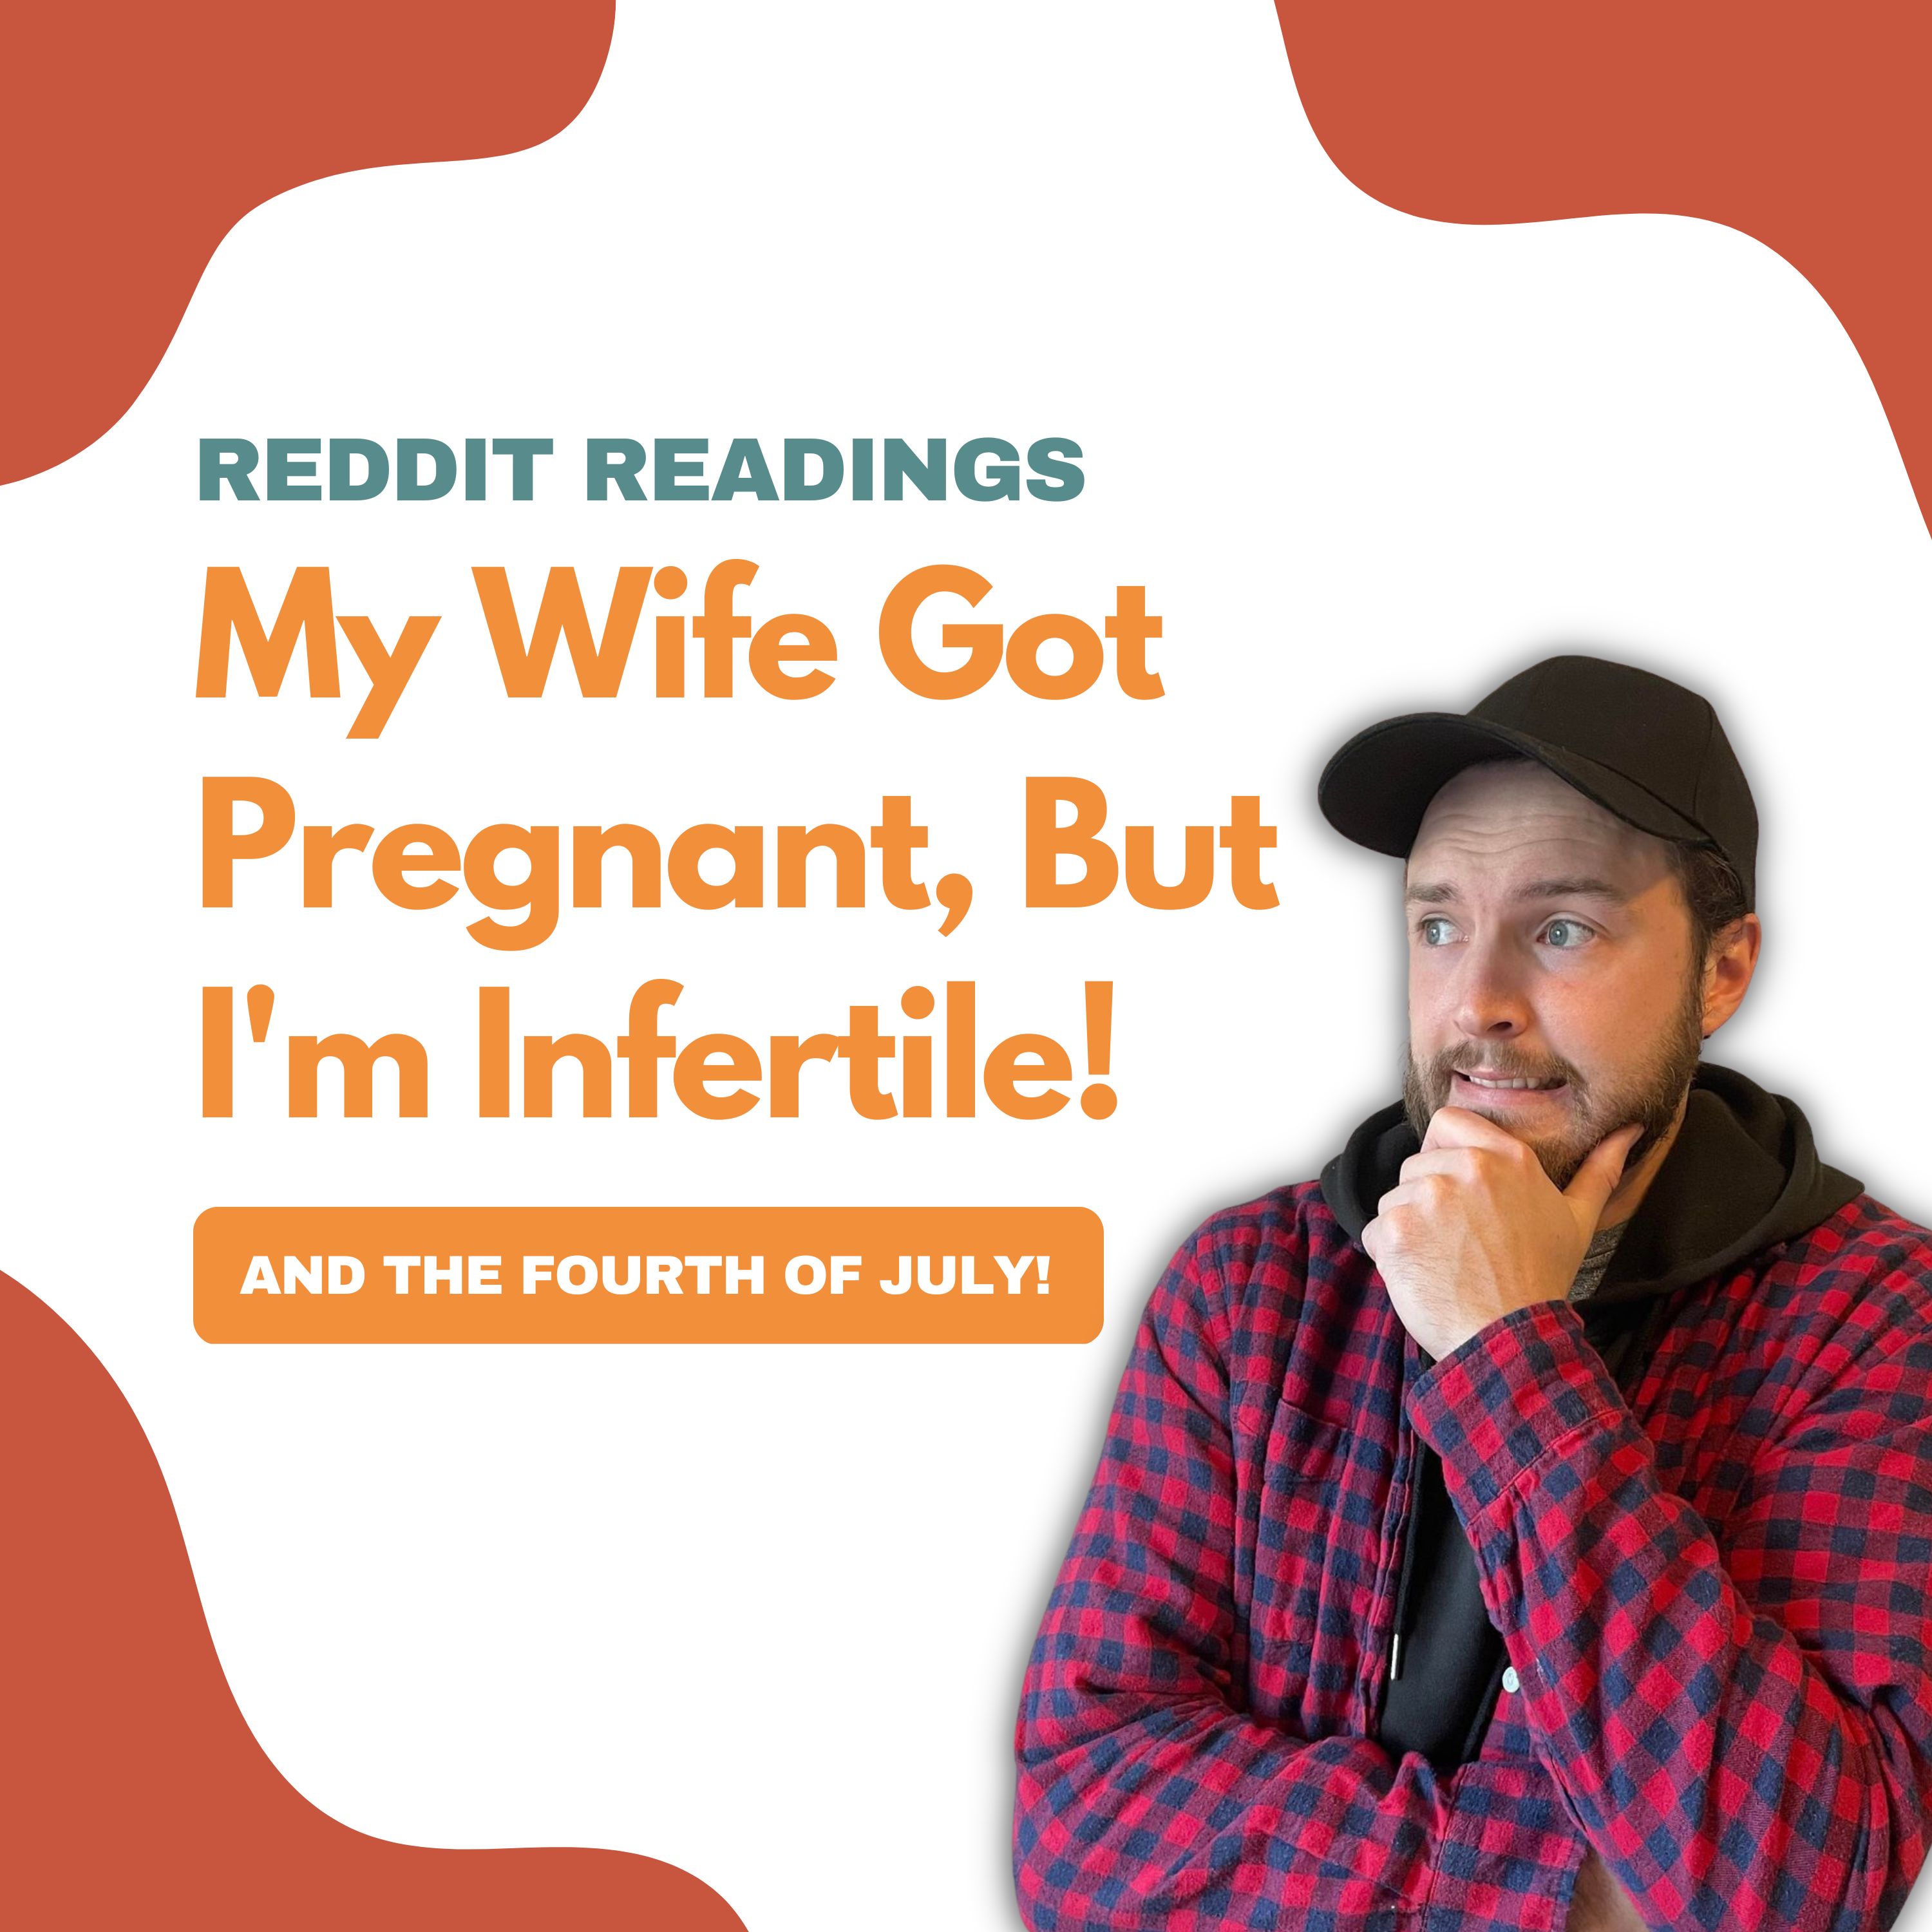 Reddit Readings | My Wife Got Pregnant, But I'm Infertile!